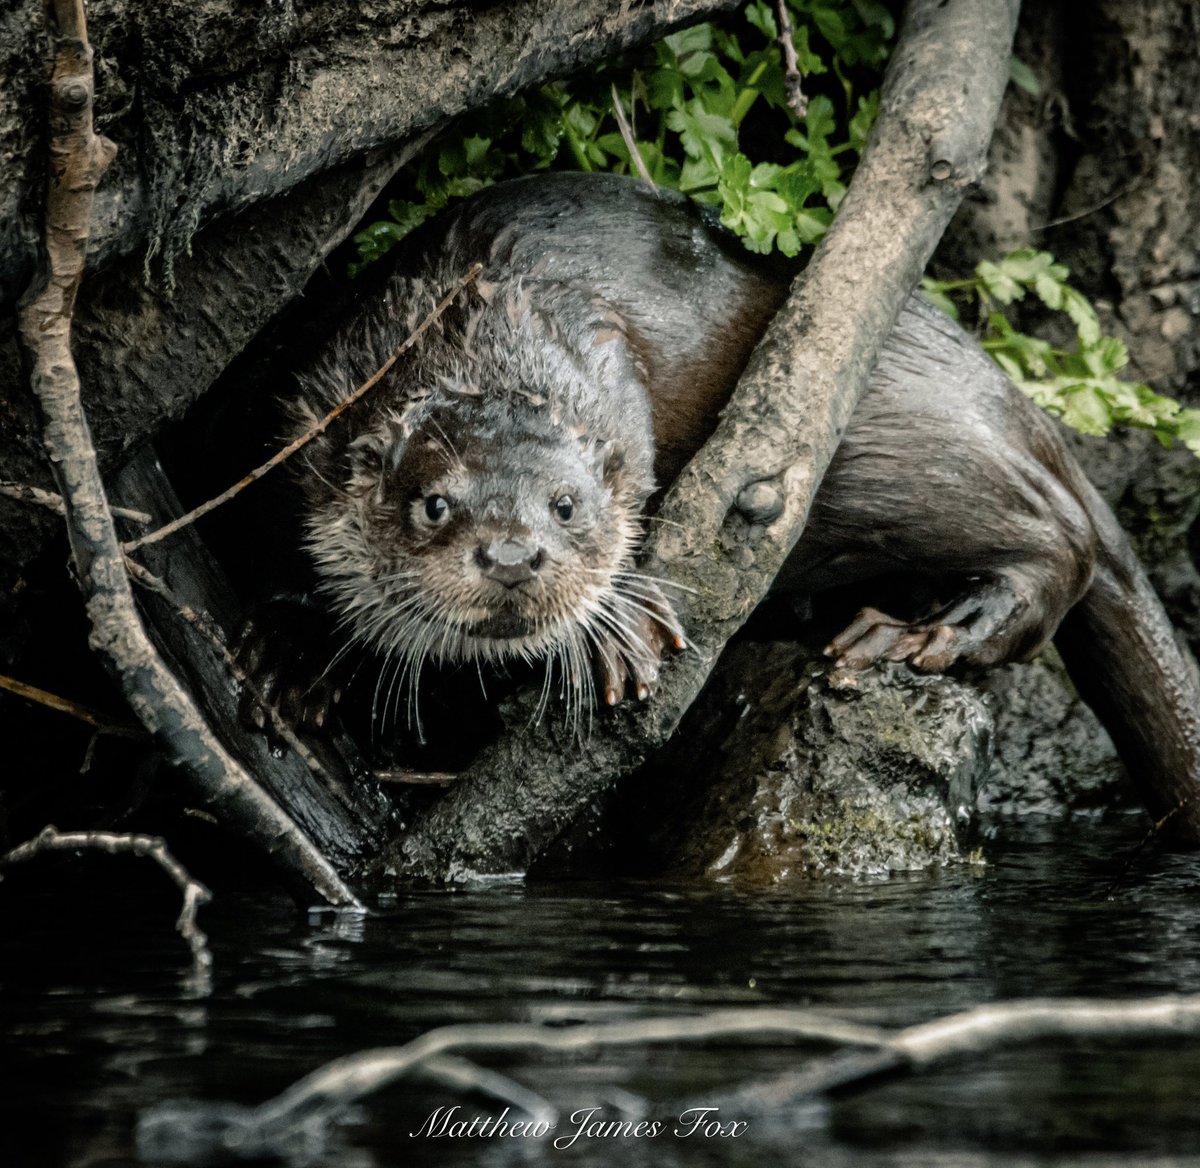 Otter on the river. 

#otter #otters #otterlove #otterlovers #river #waterways #waterway #wales #welshwaterways #mammal #welshwildlife #mountainash #rivercynon